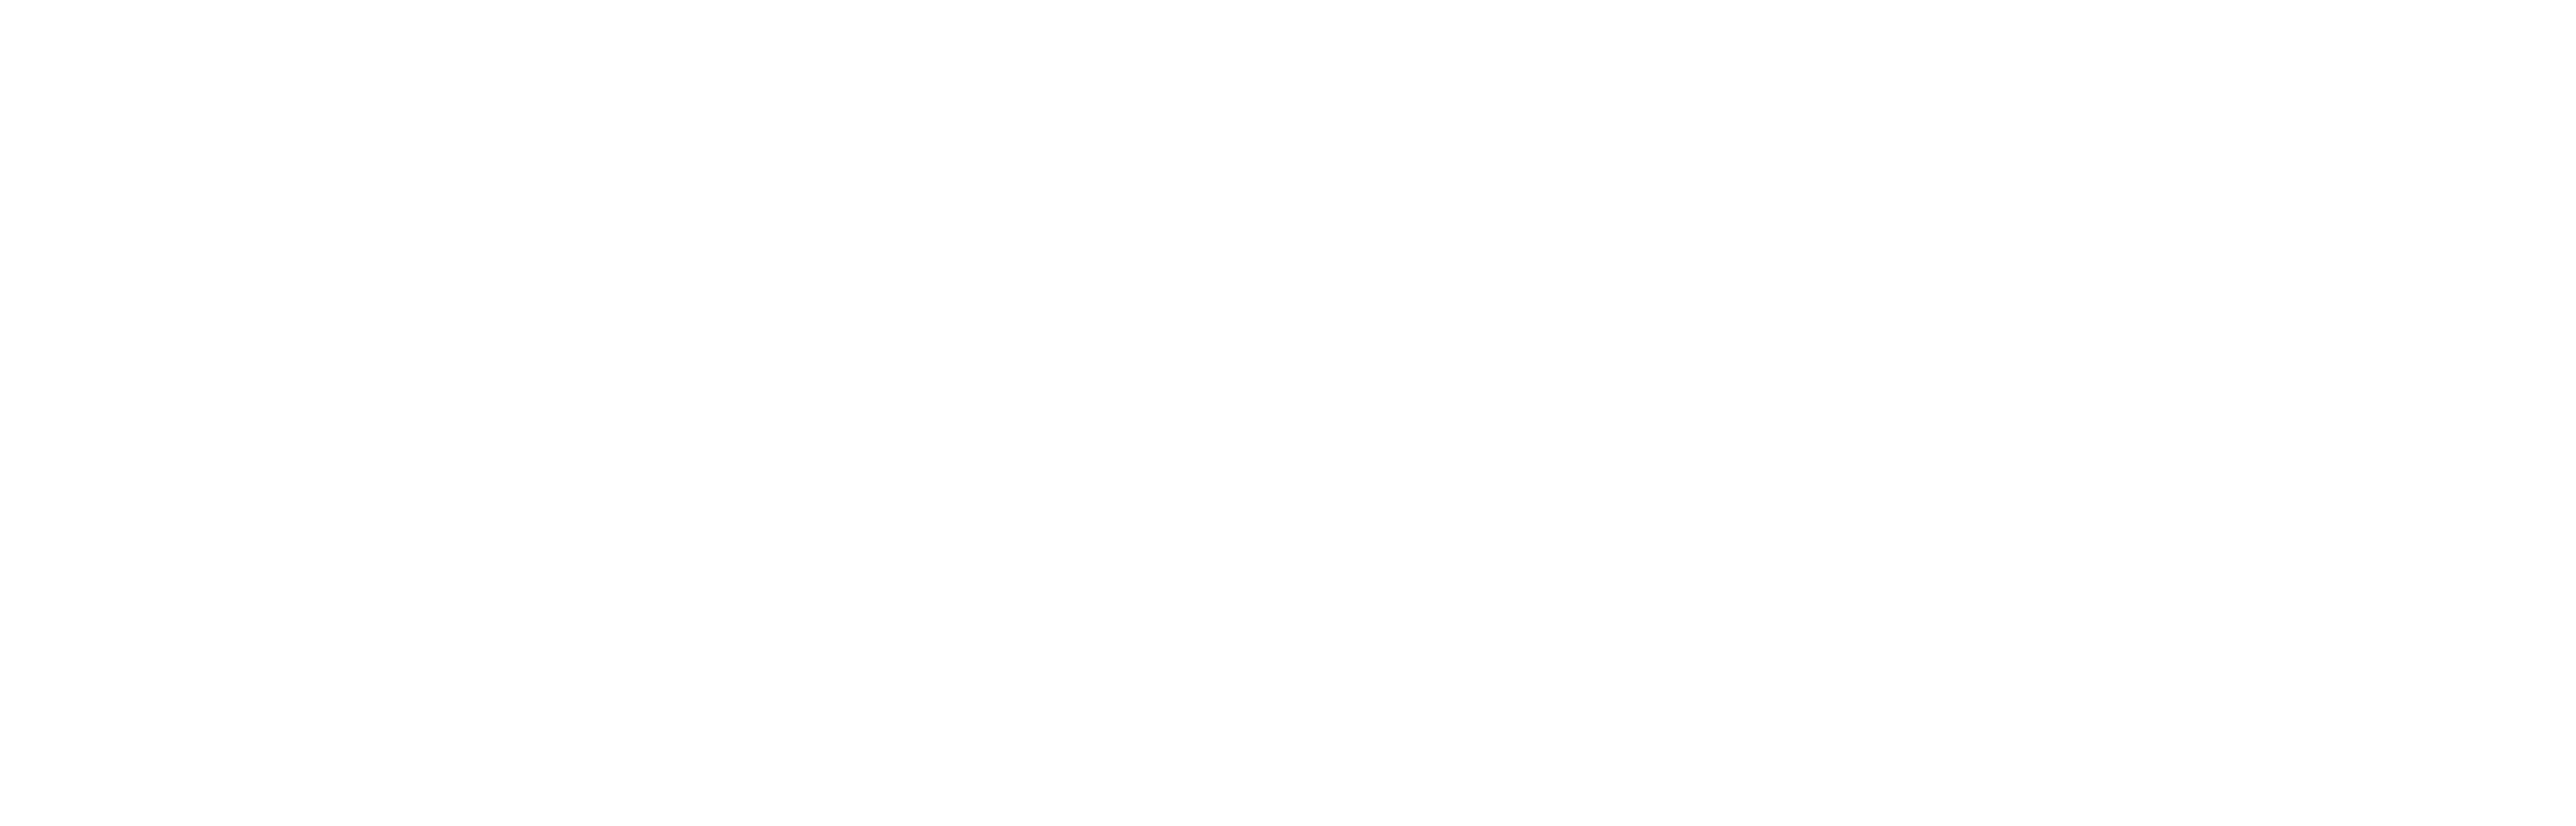 Logo Redfin